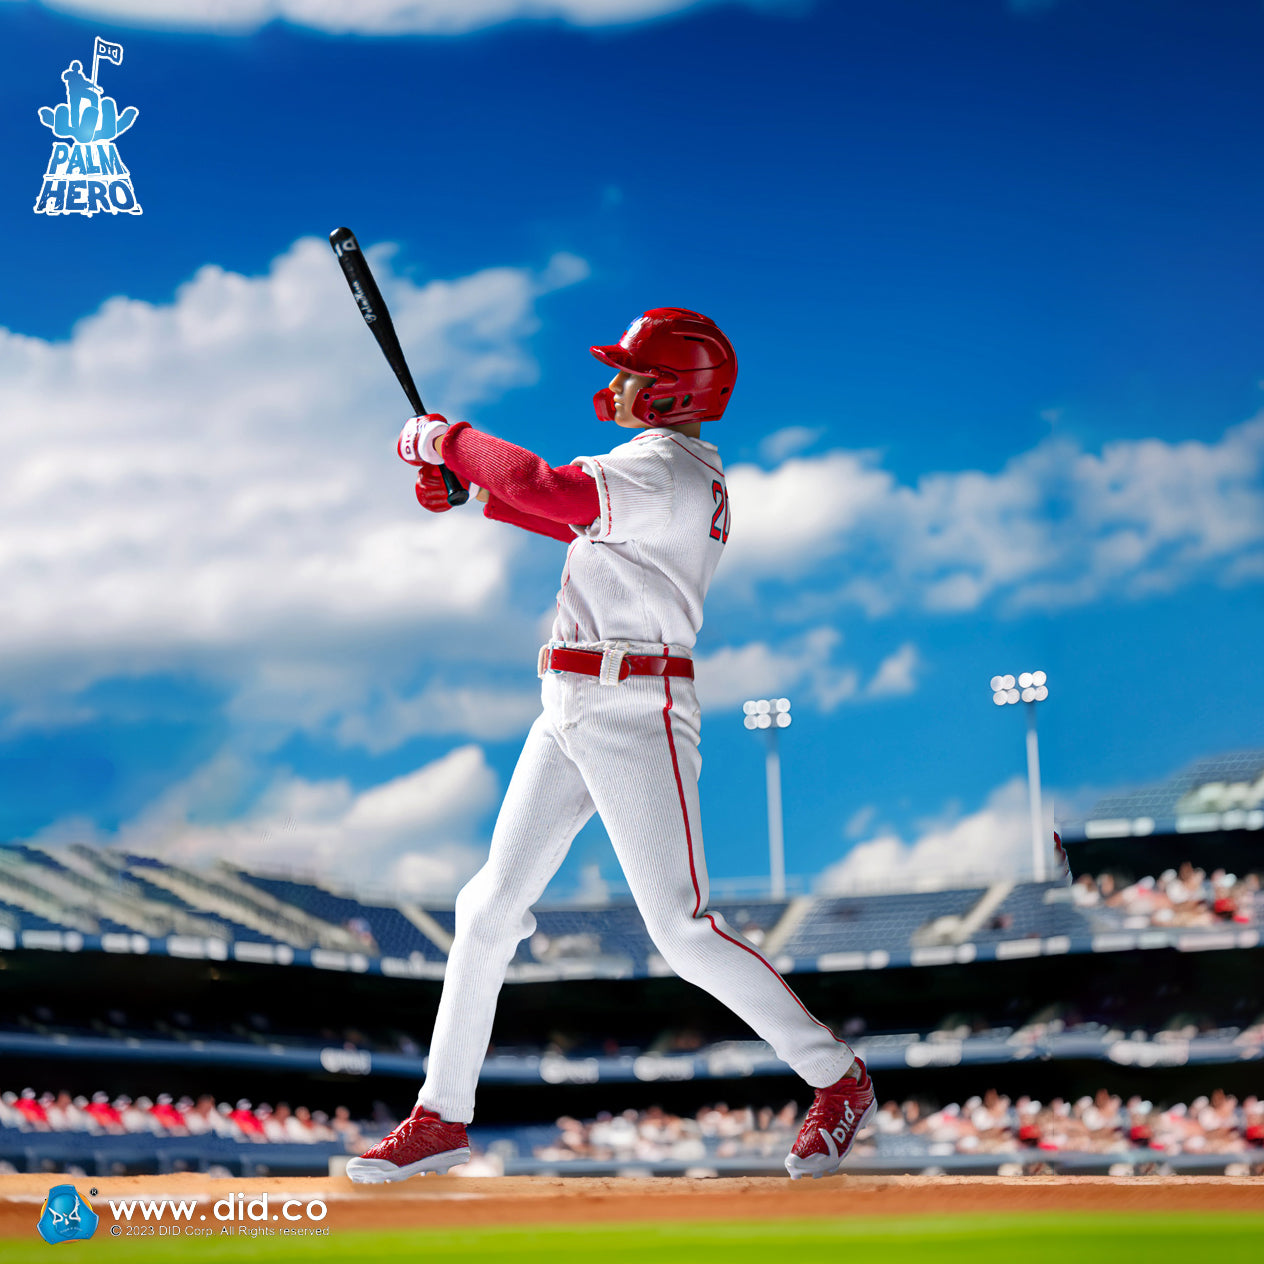 DiD - Palm Hero Simply Fun Series - The Baseballer (White Team) (1/12 Scale) - Marvelous Toys